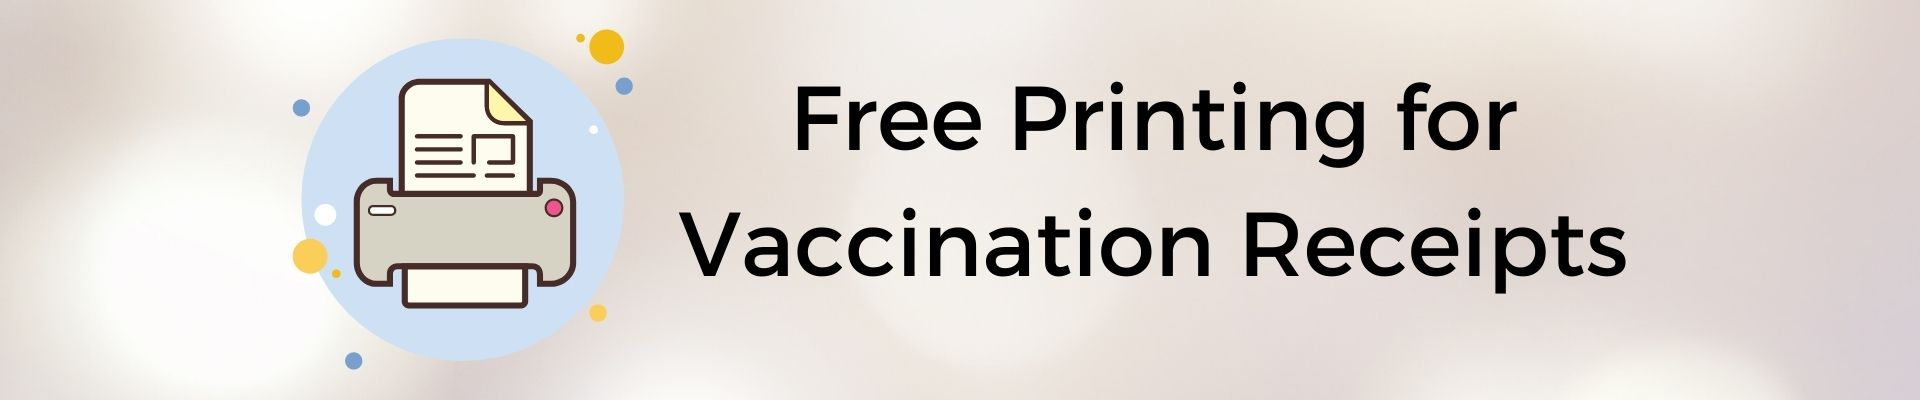 Vaccination Receipt Printing 